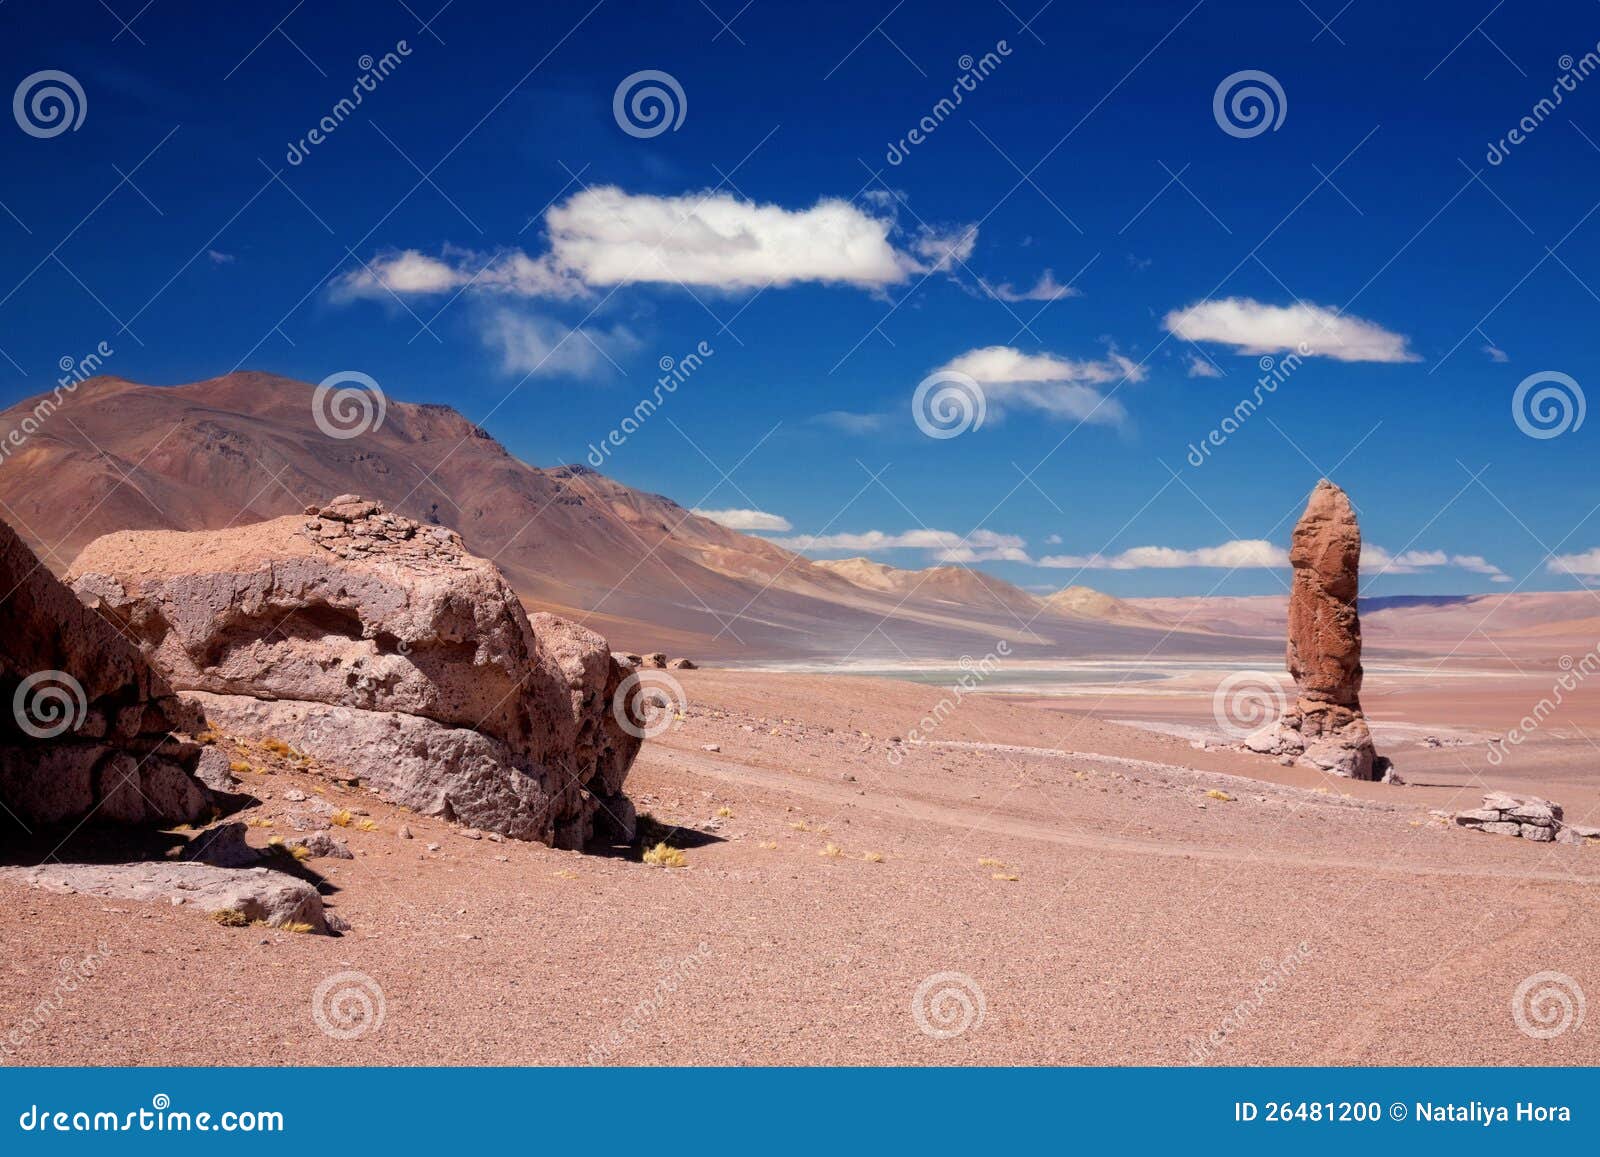 geological monolith close to salar aguas calientes